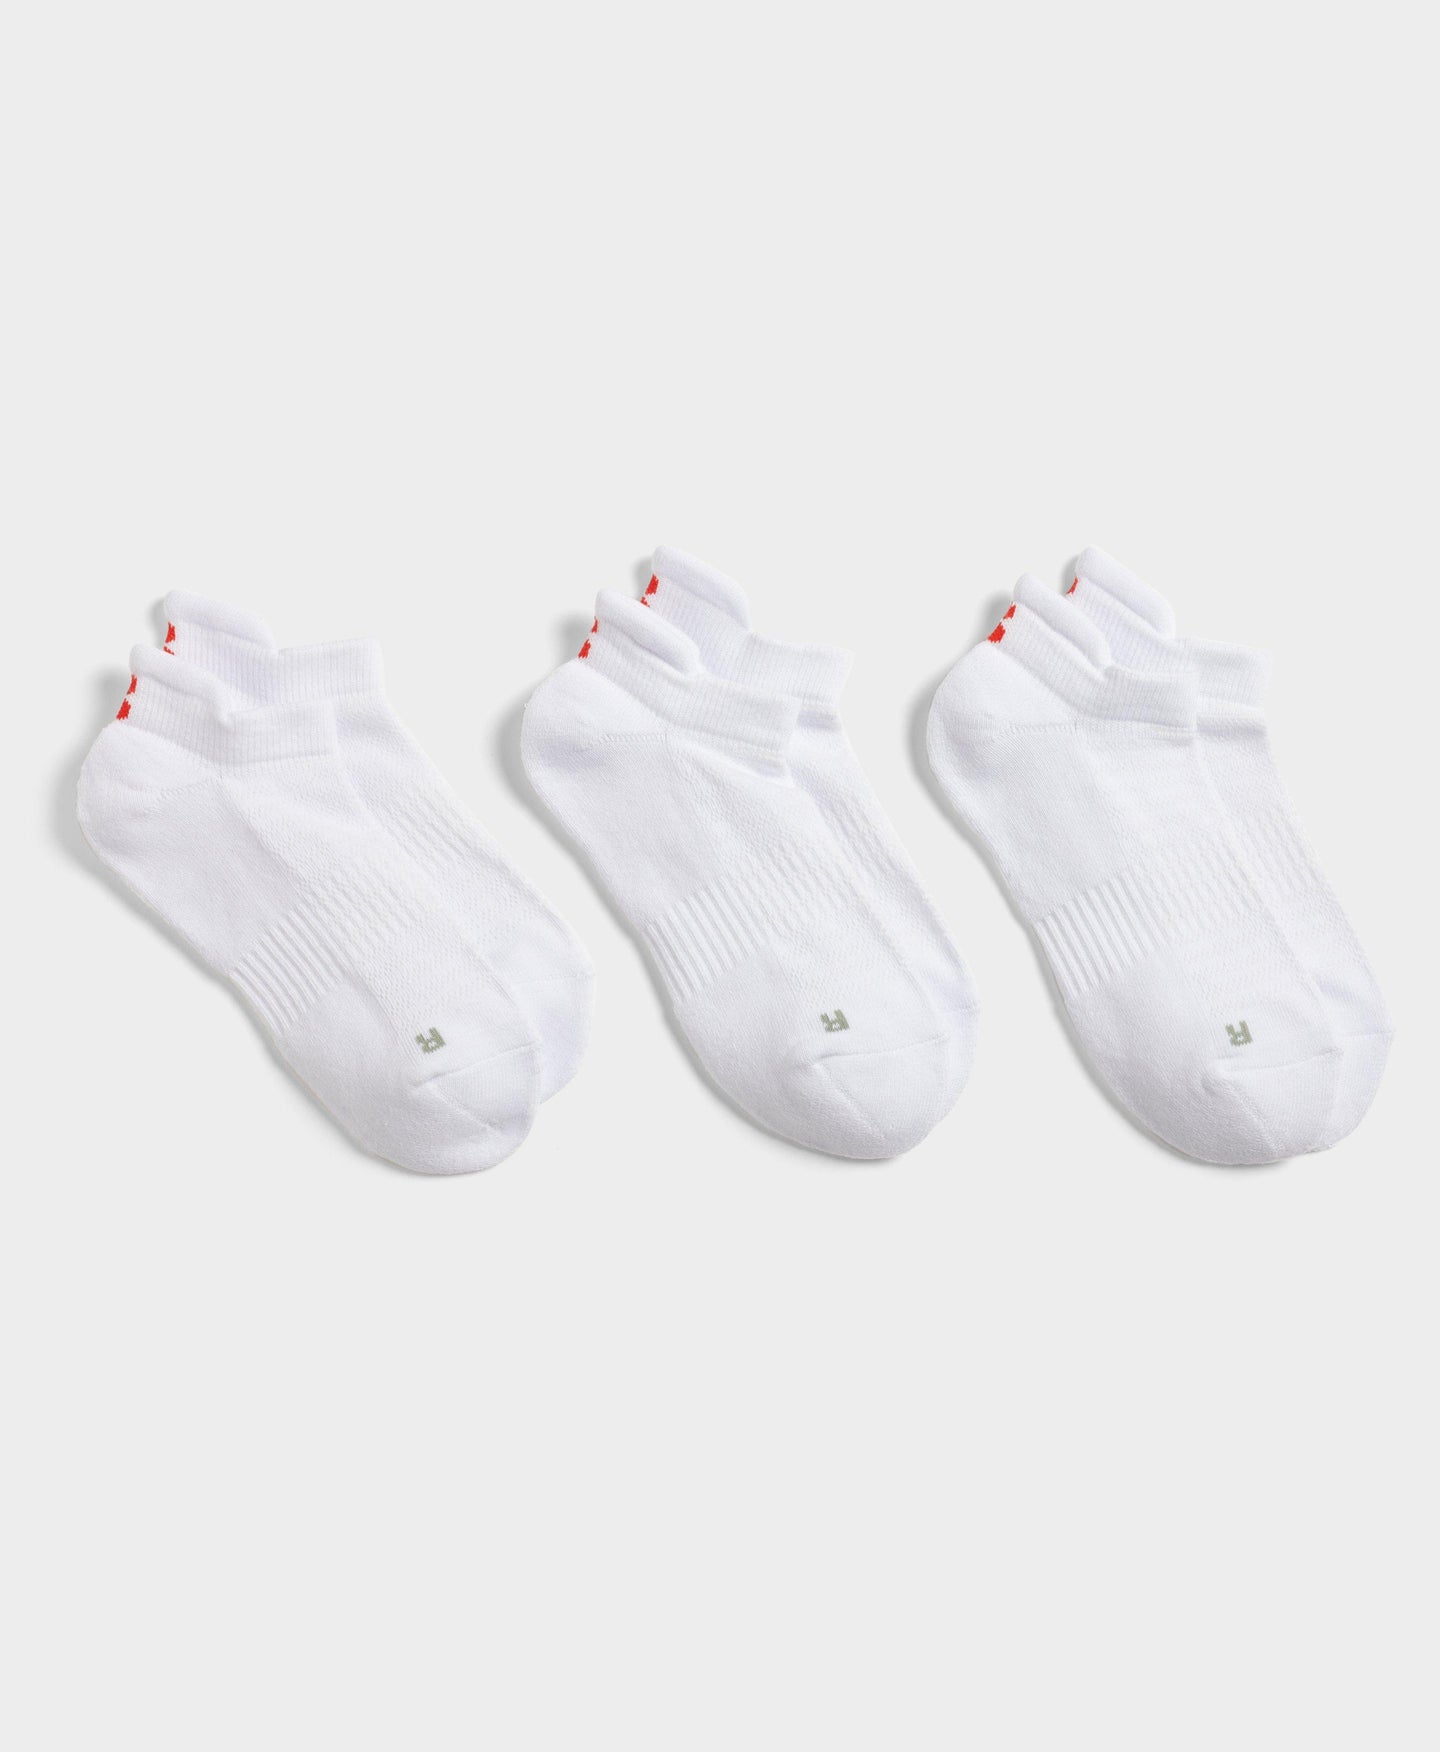 Workout Trainer Socks 3 Pack Sb8984 White